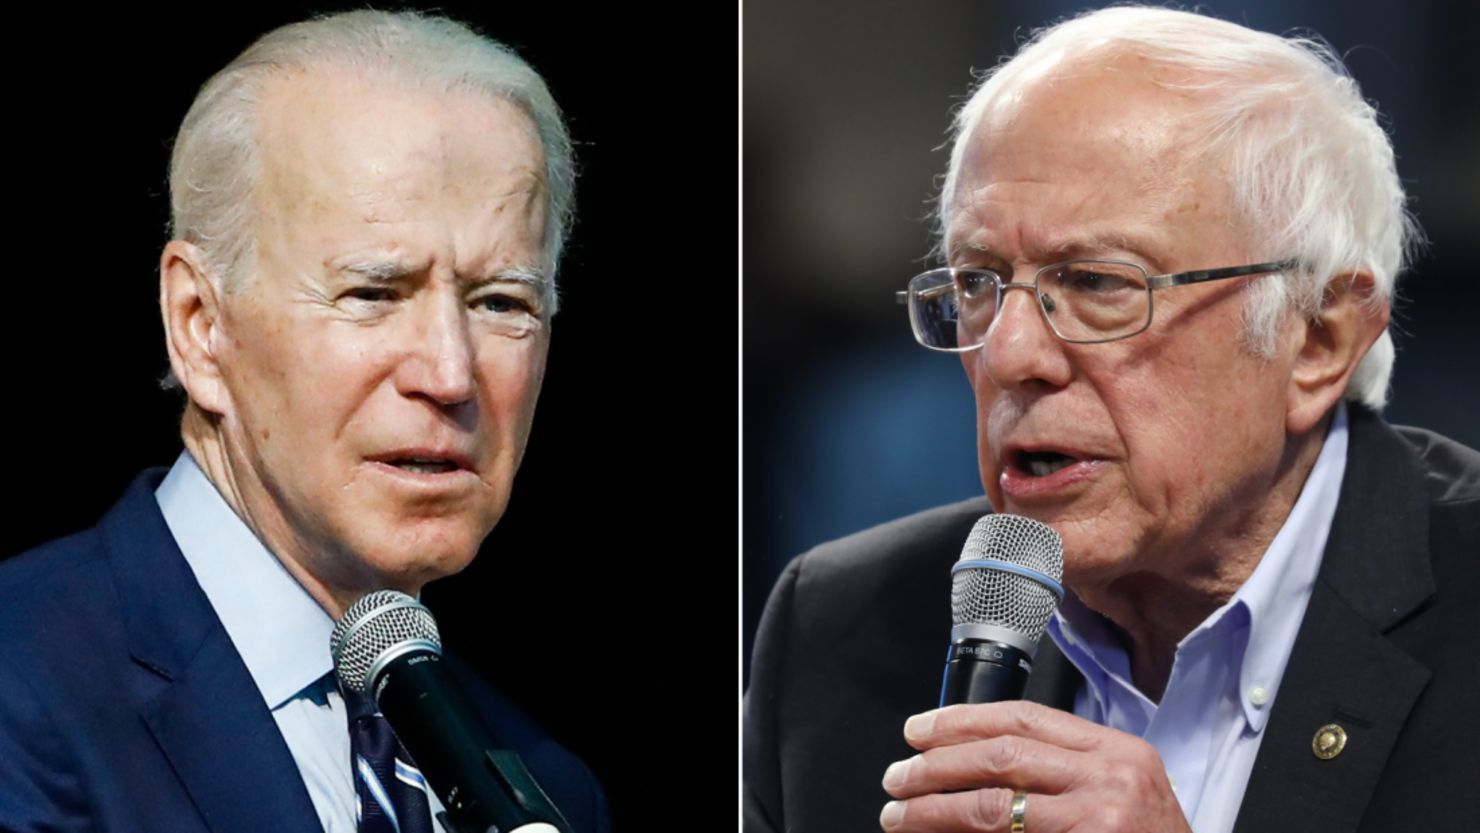 Dnc Debate Criteria Sets Up Joe Biden And Bernie Sanders Face Off Cnn Politics 7272